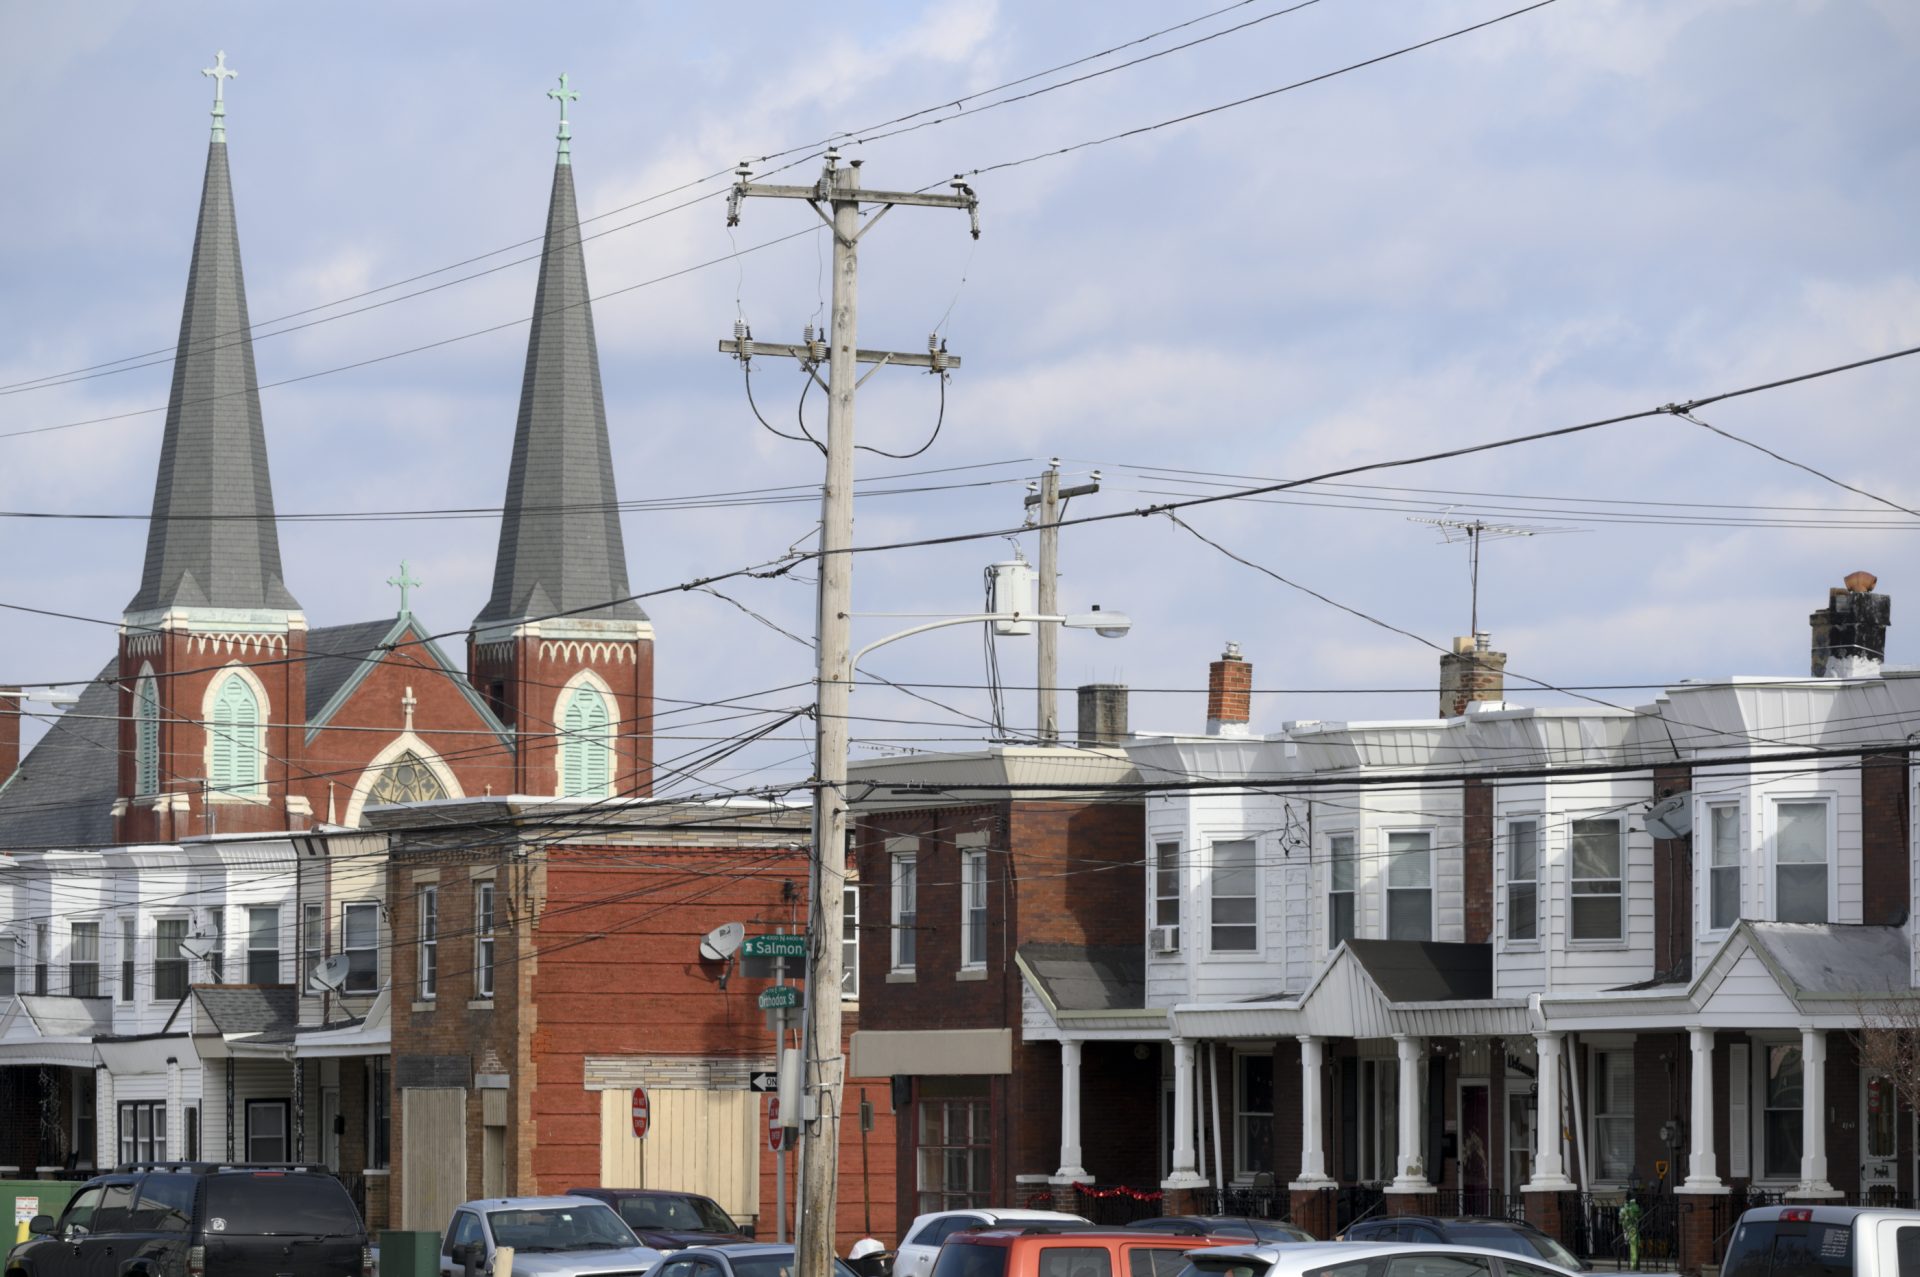 St John Cantius Church and row homes in the Bridesburg neighborhood of Philadelphia.